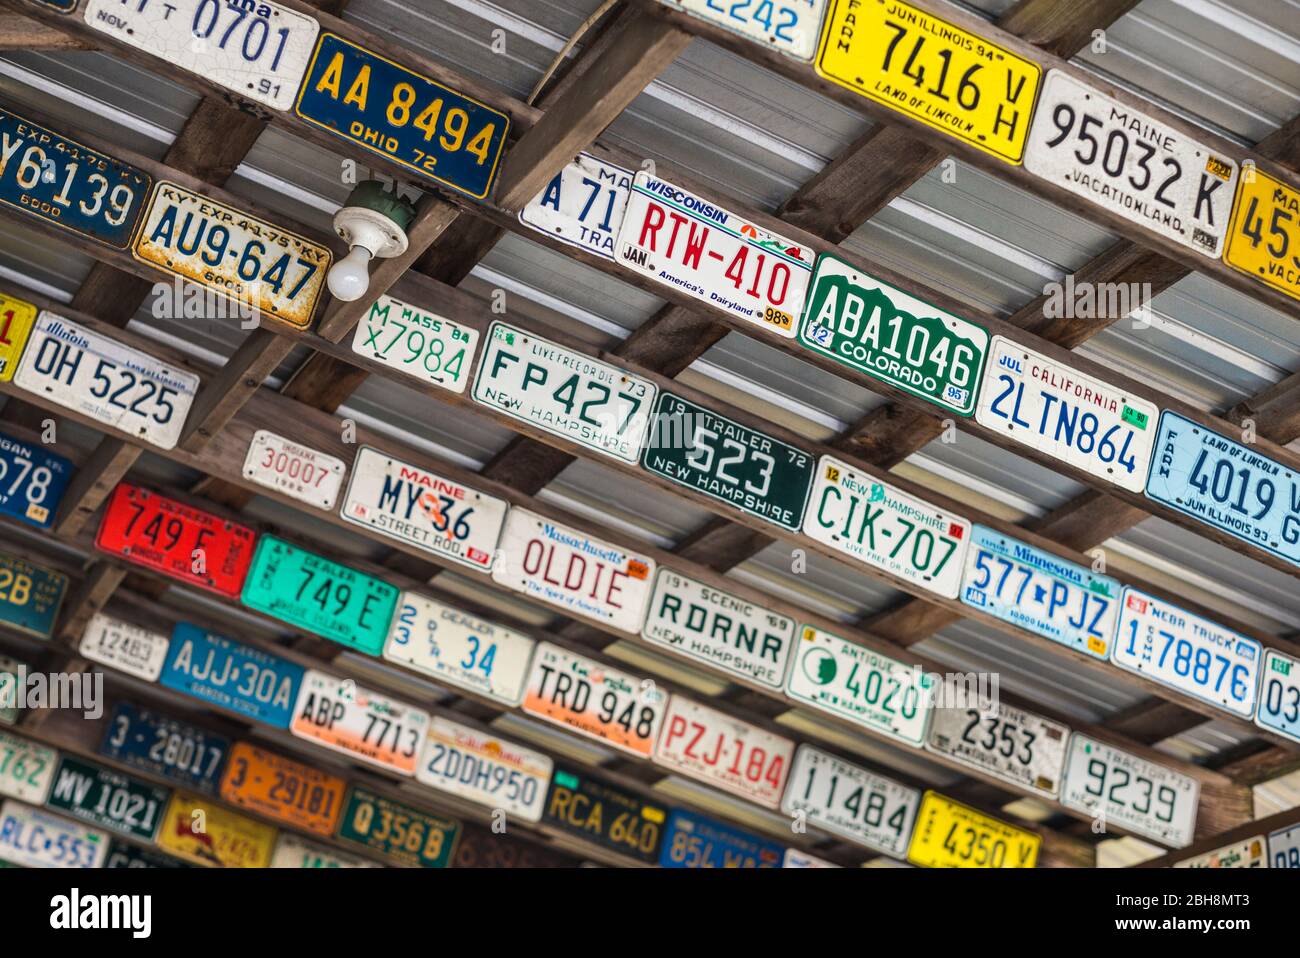 USA, Maine, Wells, antique license plates Stock Photo